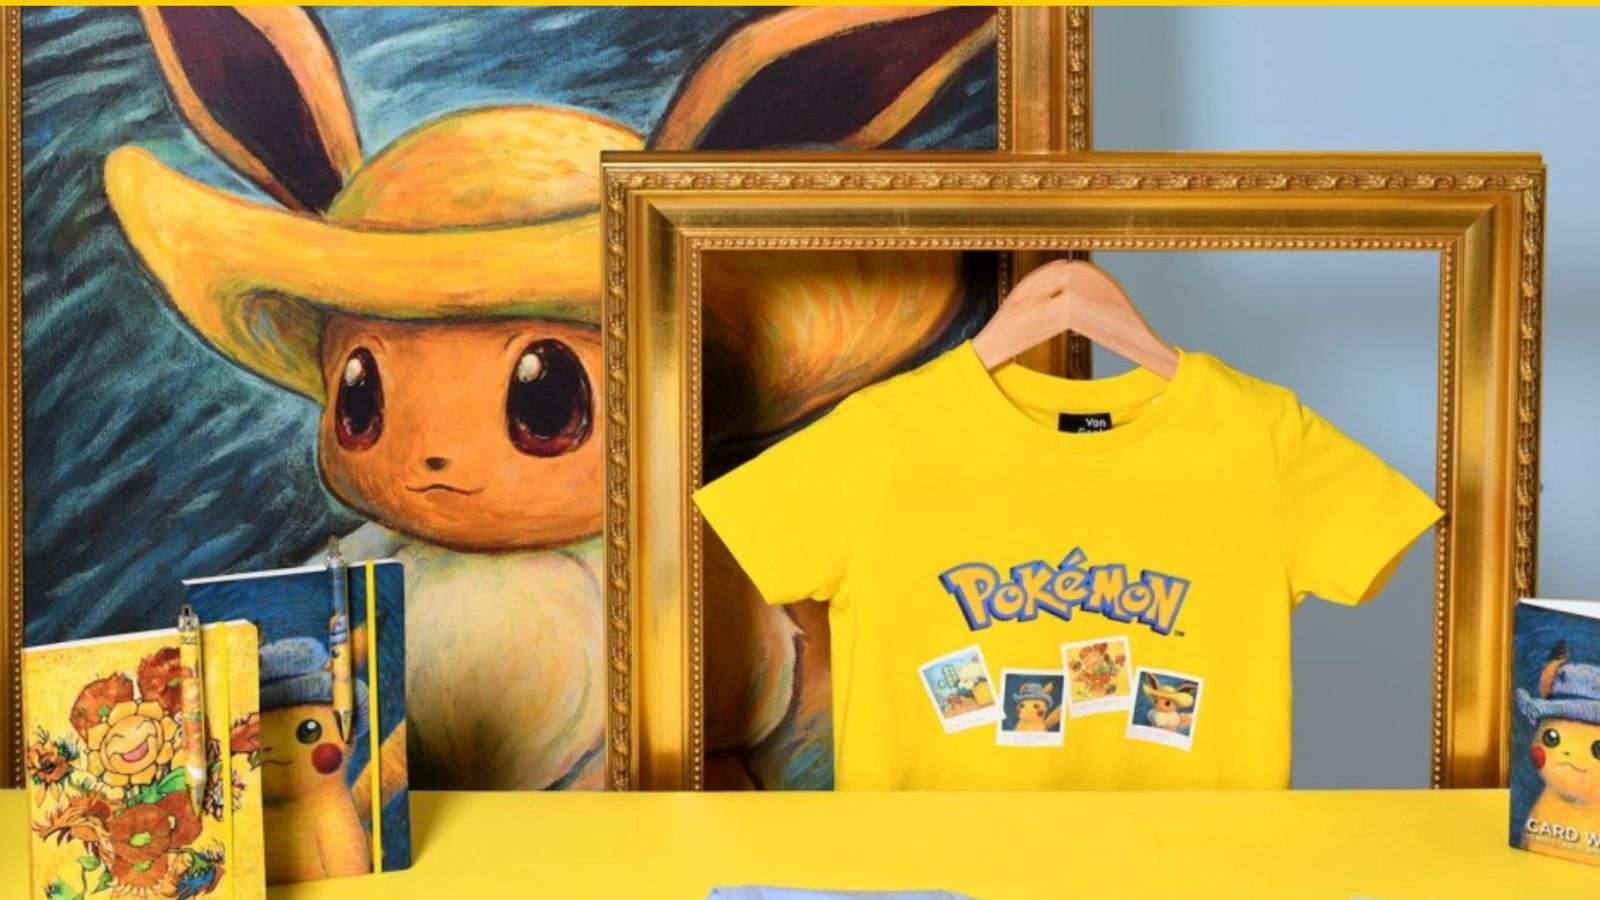 Van Gogh Museum selling Pikachu merch